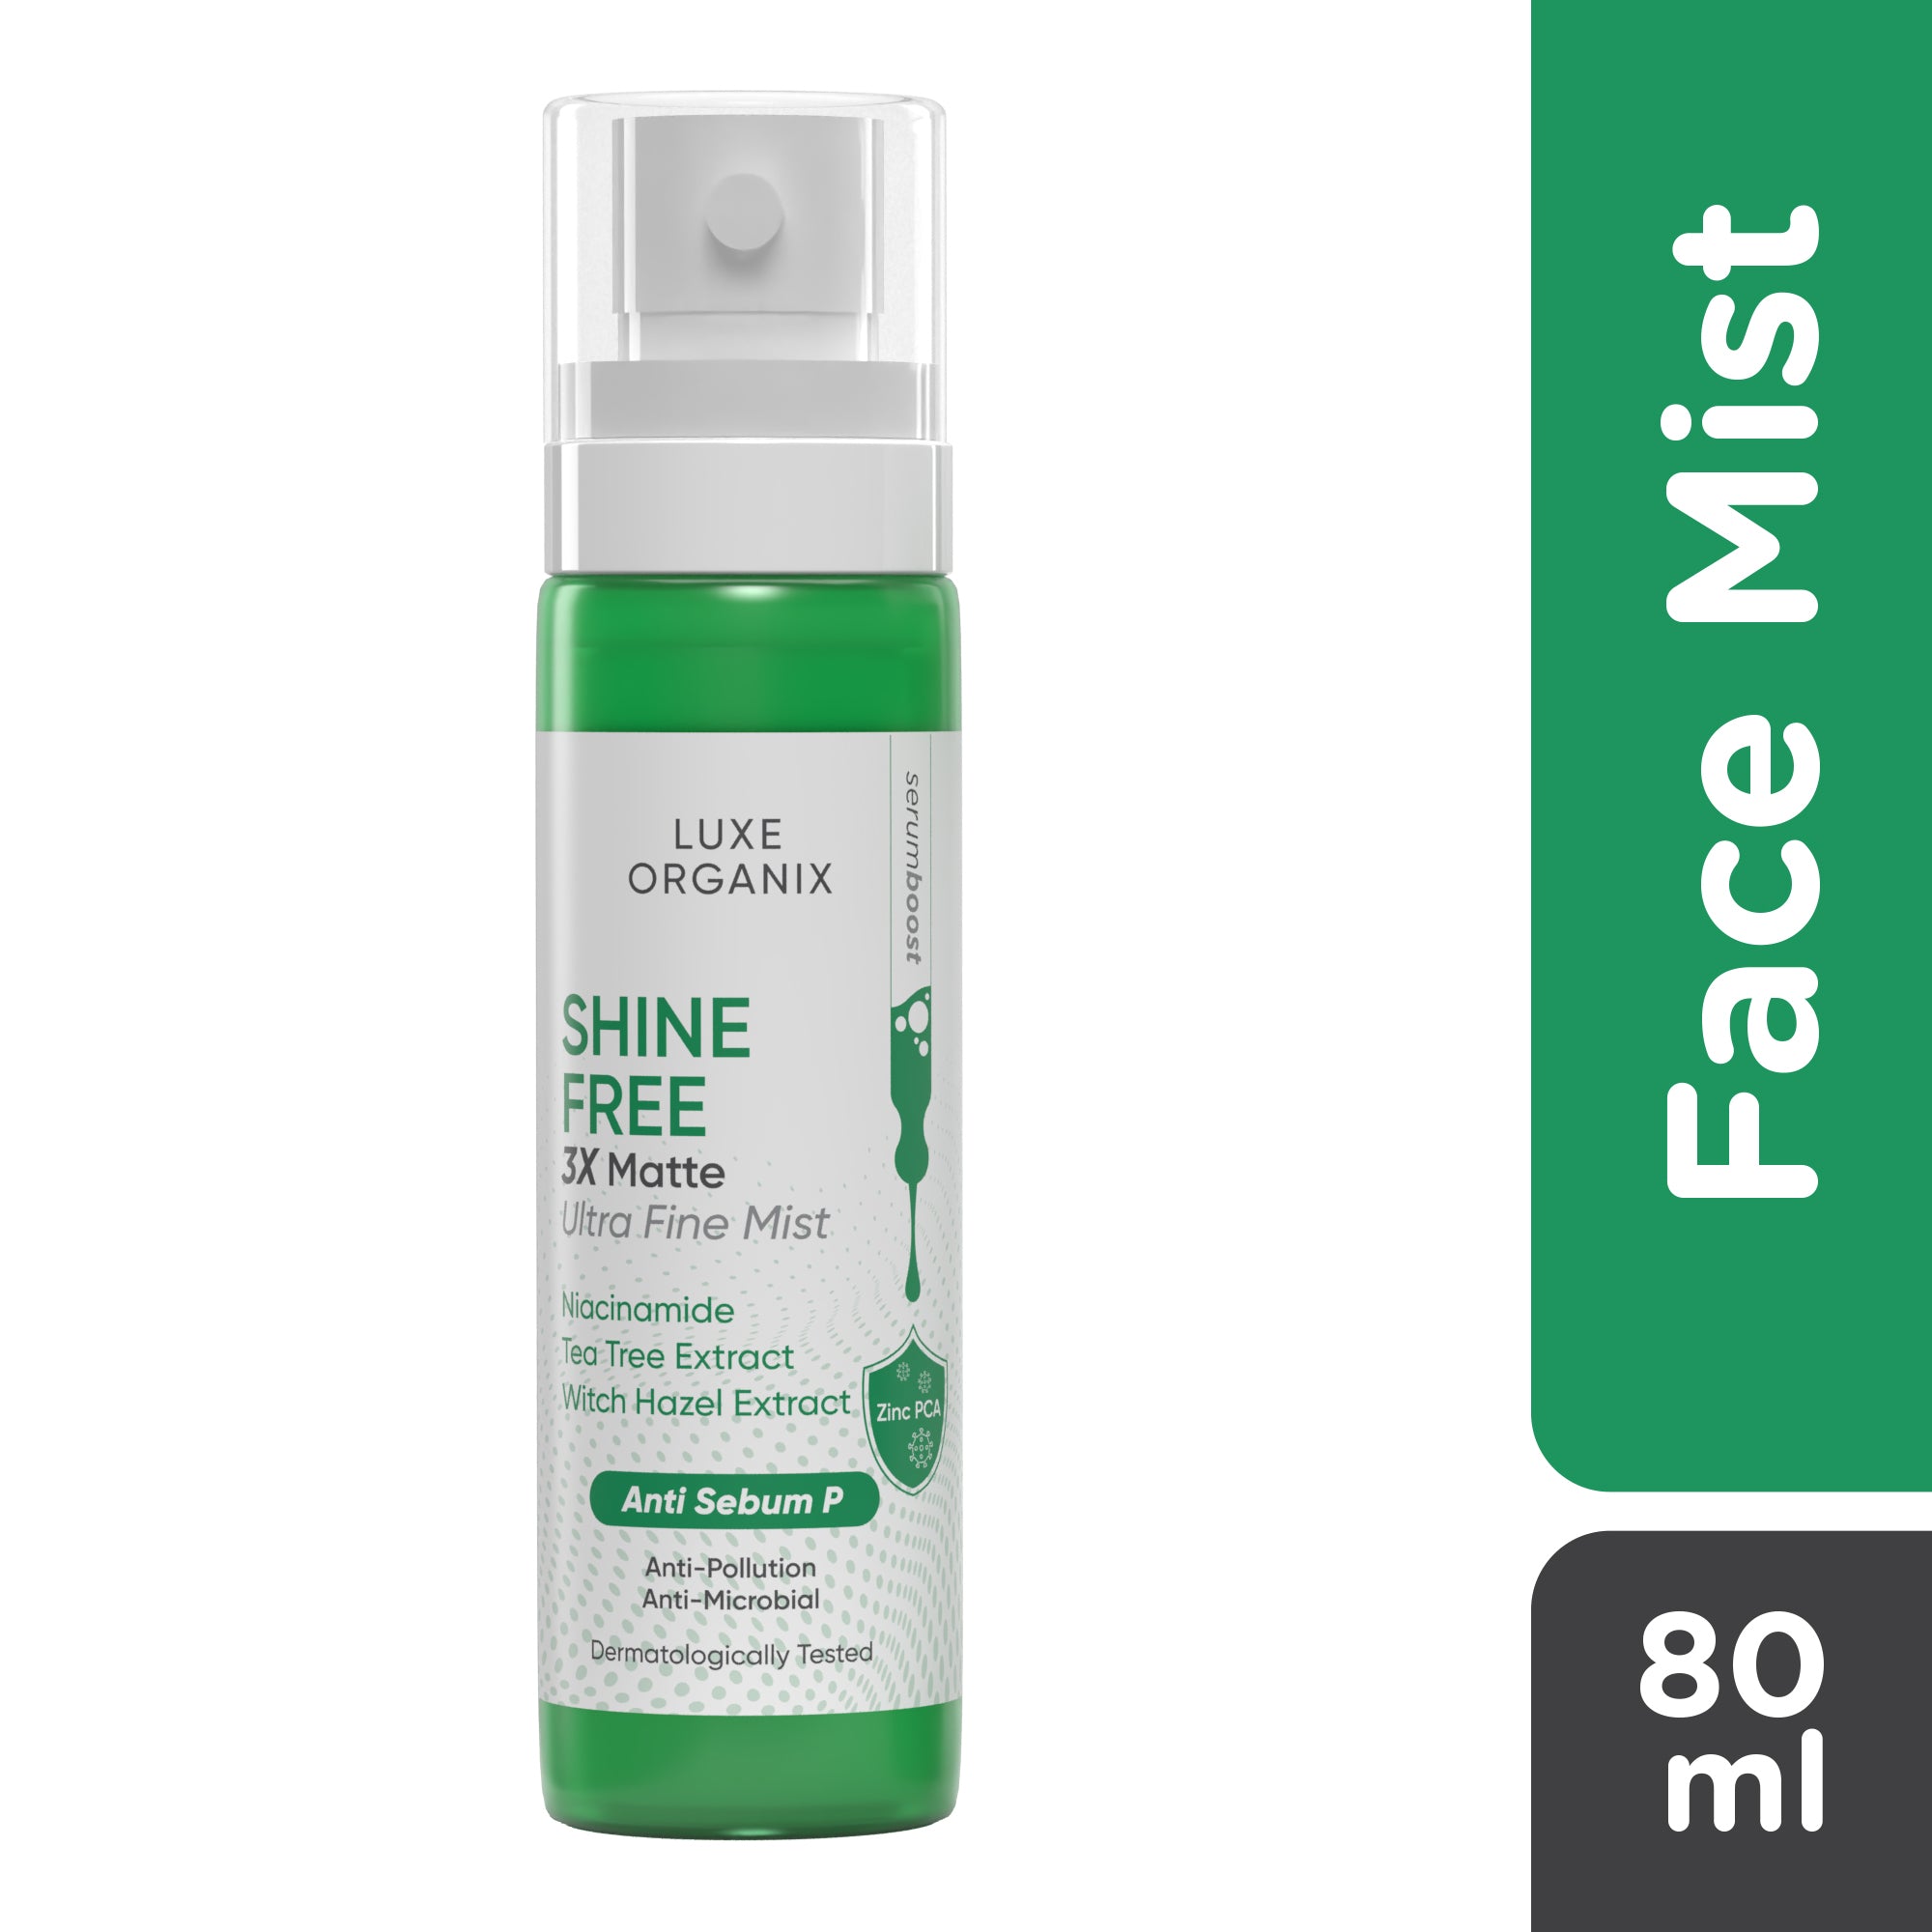 Shine Free 3x Matte Ultra Fine Mist